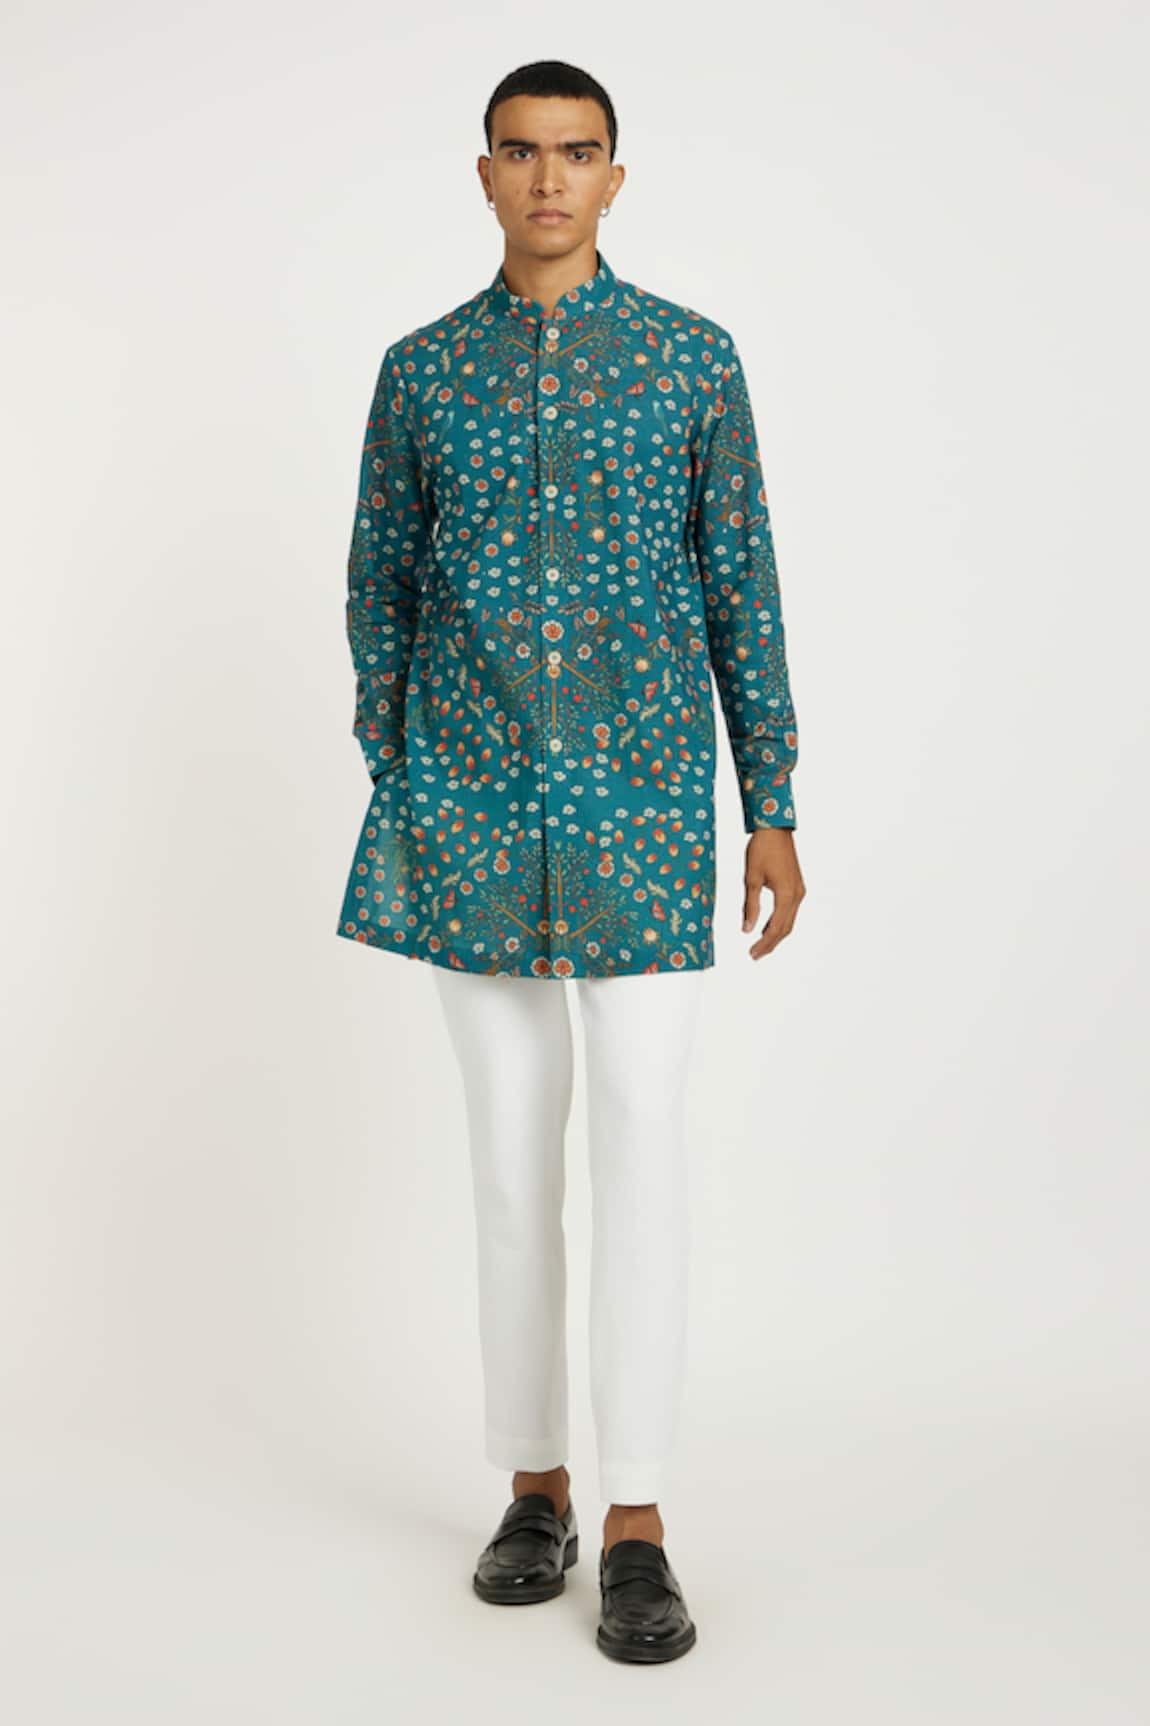 Buy Pathani Suit for Men Online - Pathani Kurta Pajama